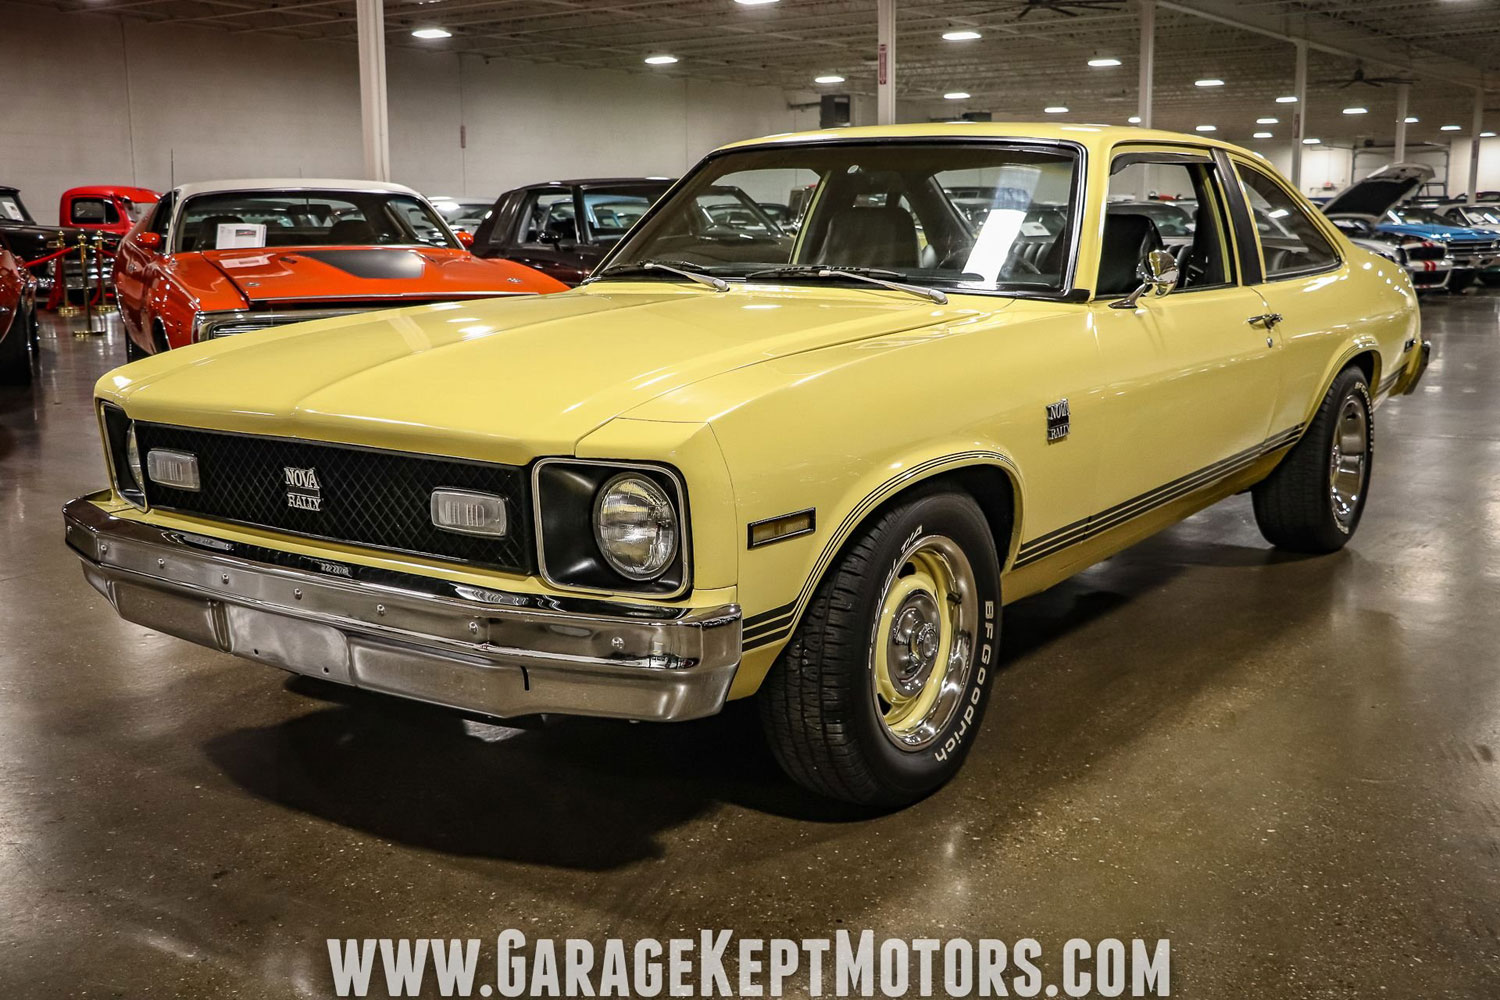 https://gmauthority.com/blog/wp-content/uploads/2021/04/1978-Chevrolet-Nova-Rally-Sport-Exterior-002-Garage-Kept-Motors-Yellow-front-three-quarters.jpg